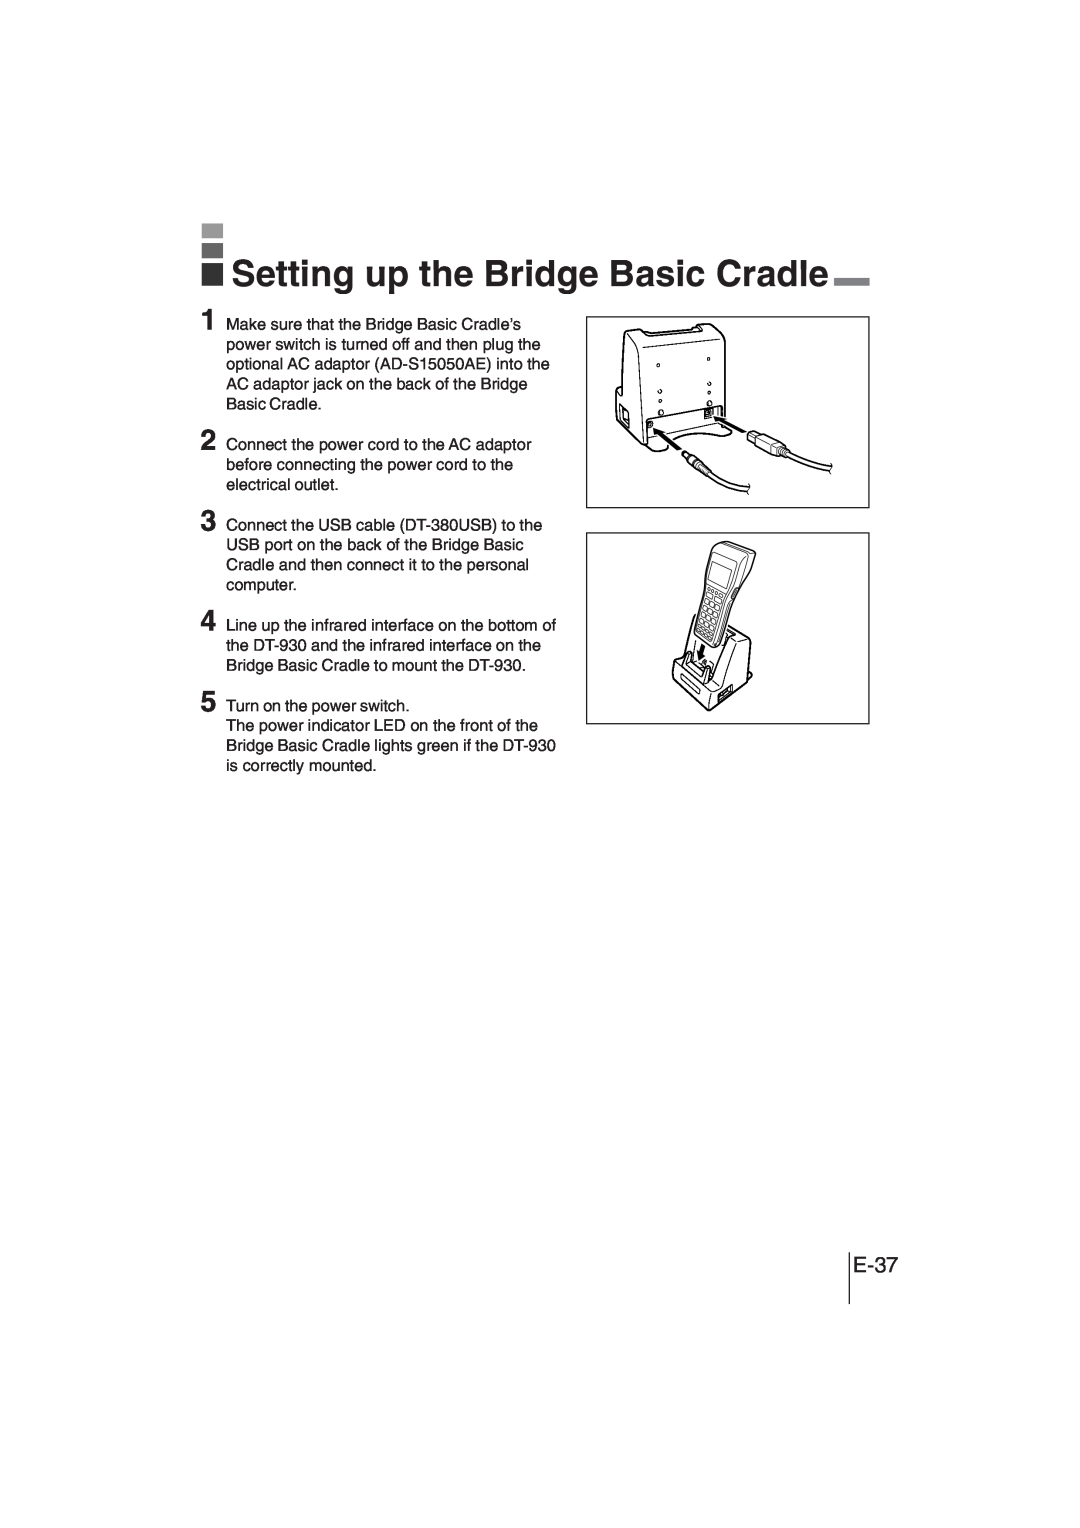 Casio DT-930 manual Setting up the Bridge Basic Cradle, E-37 